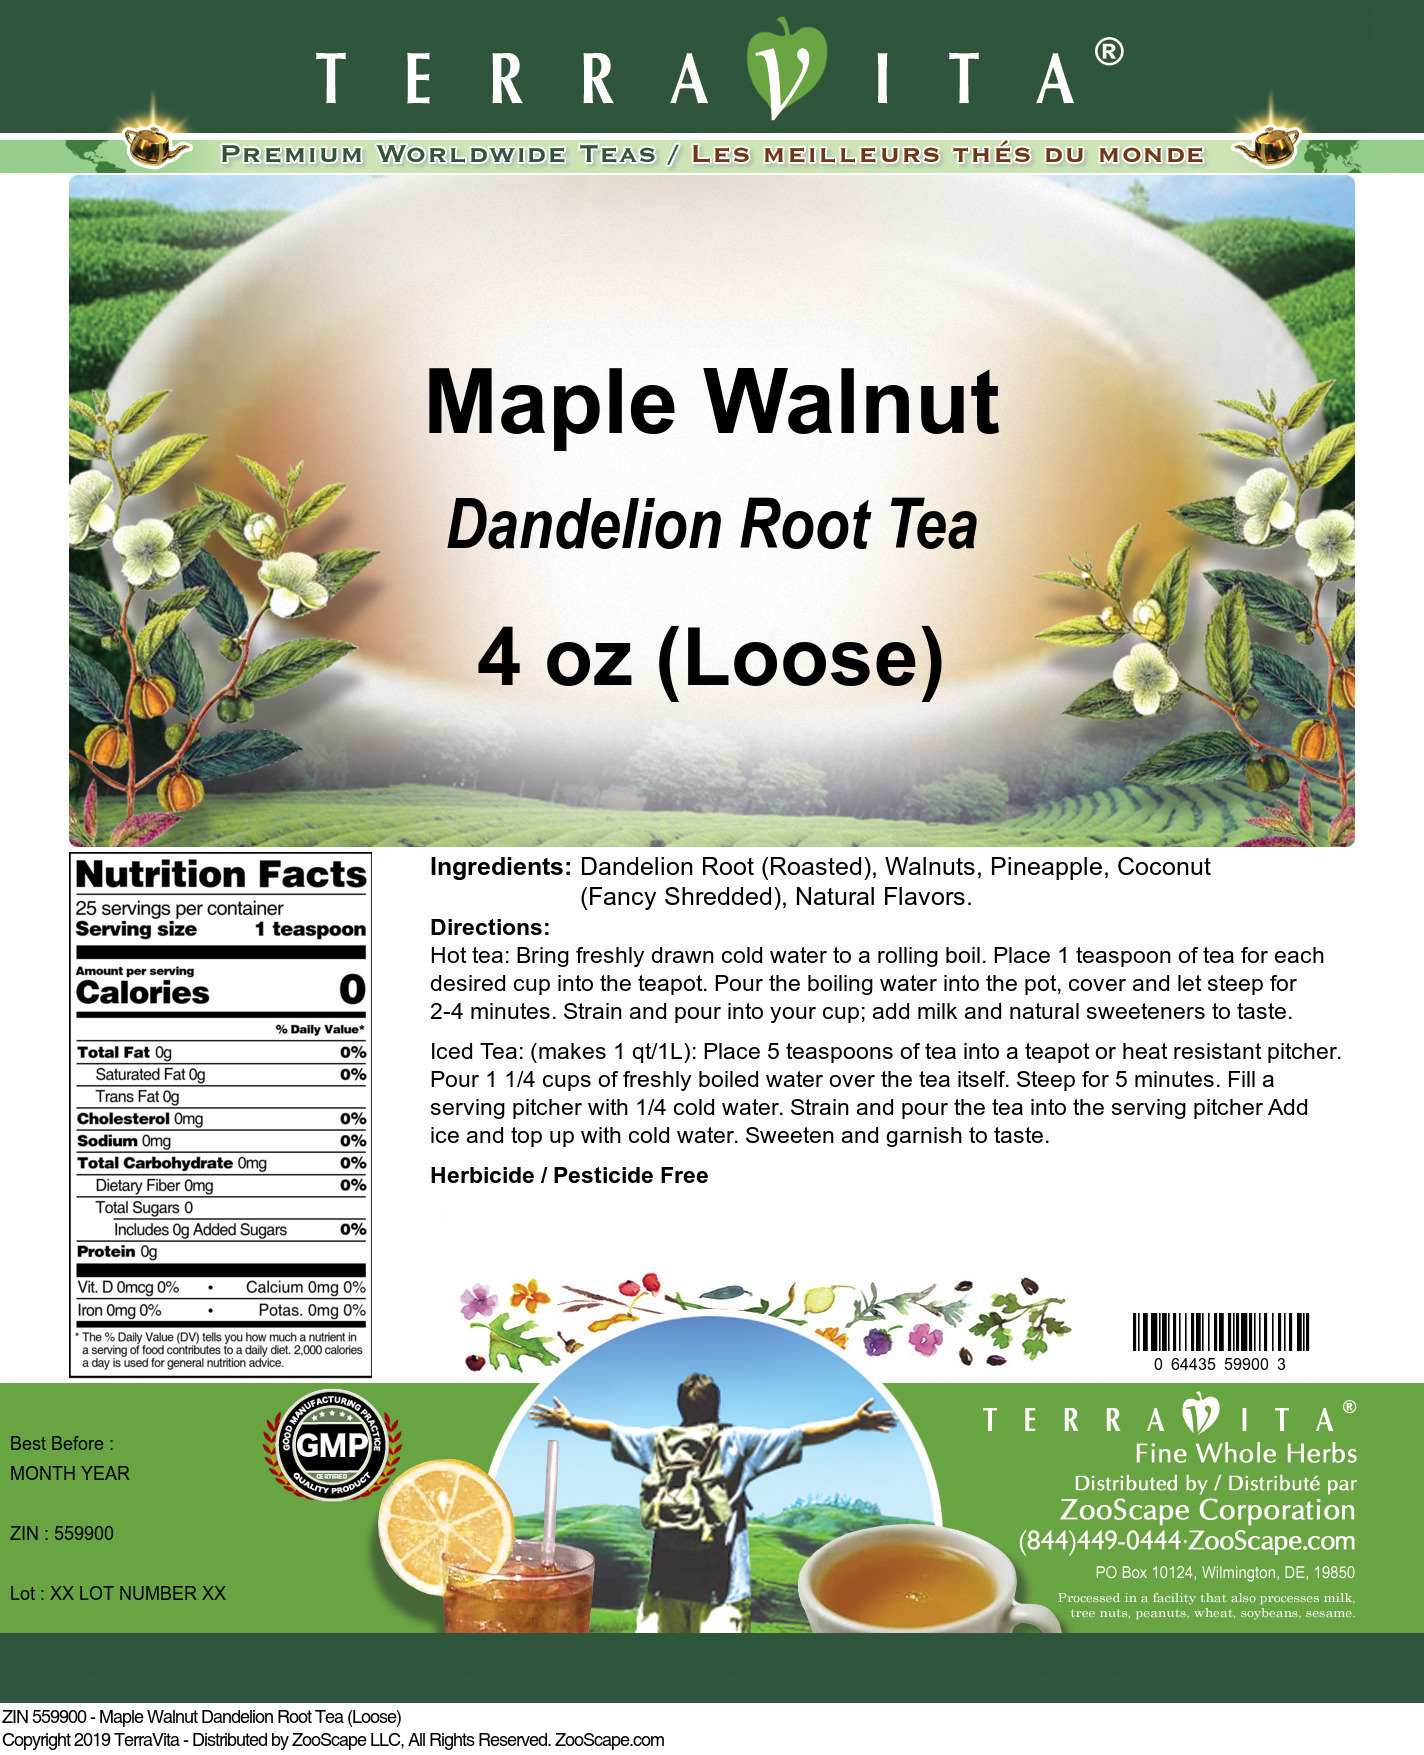 Maple Walnut Dandelion Root Tea (Loose) - Label